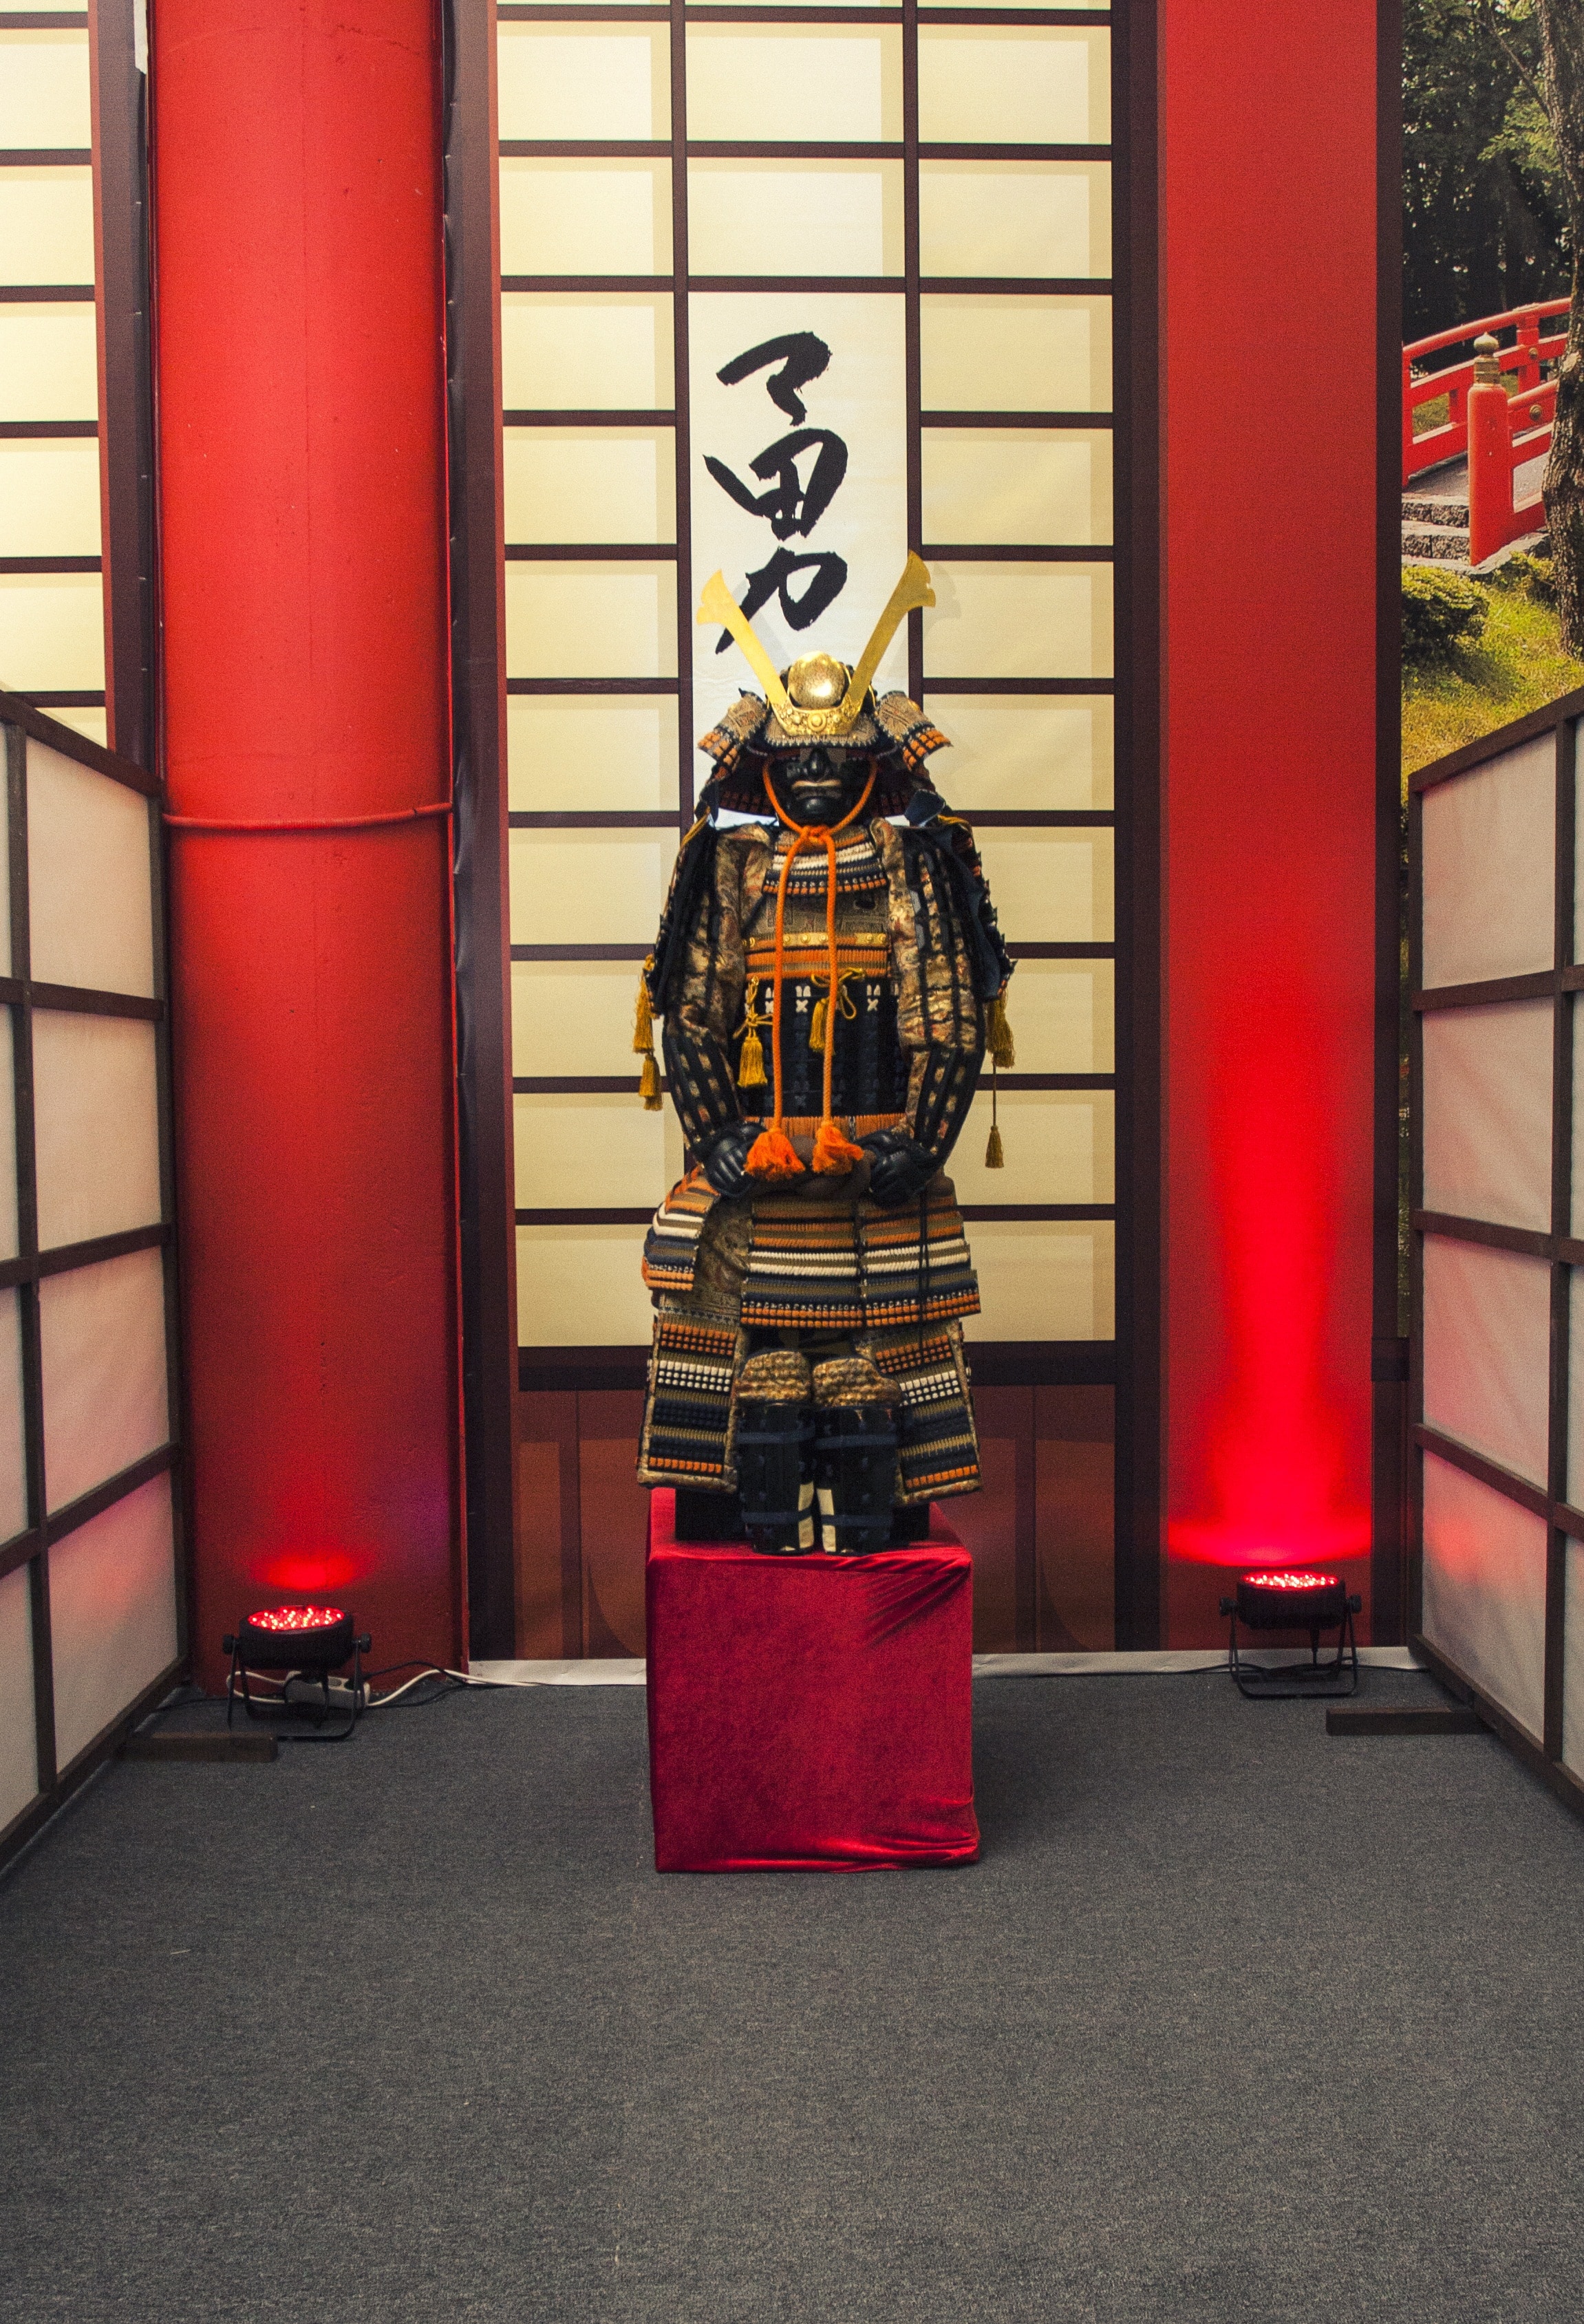 kabuto helmet and samurai warrior armor